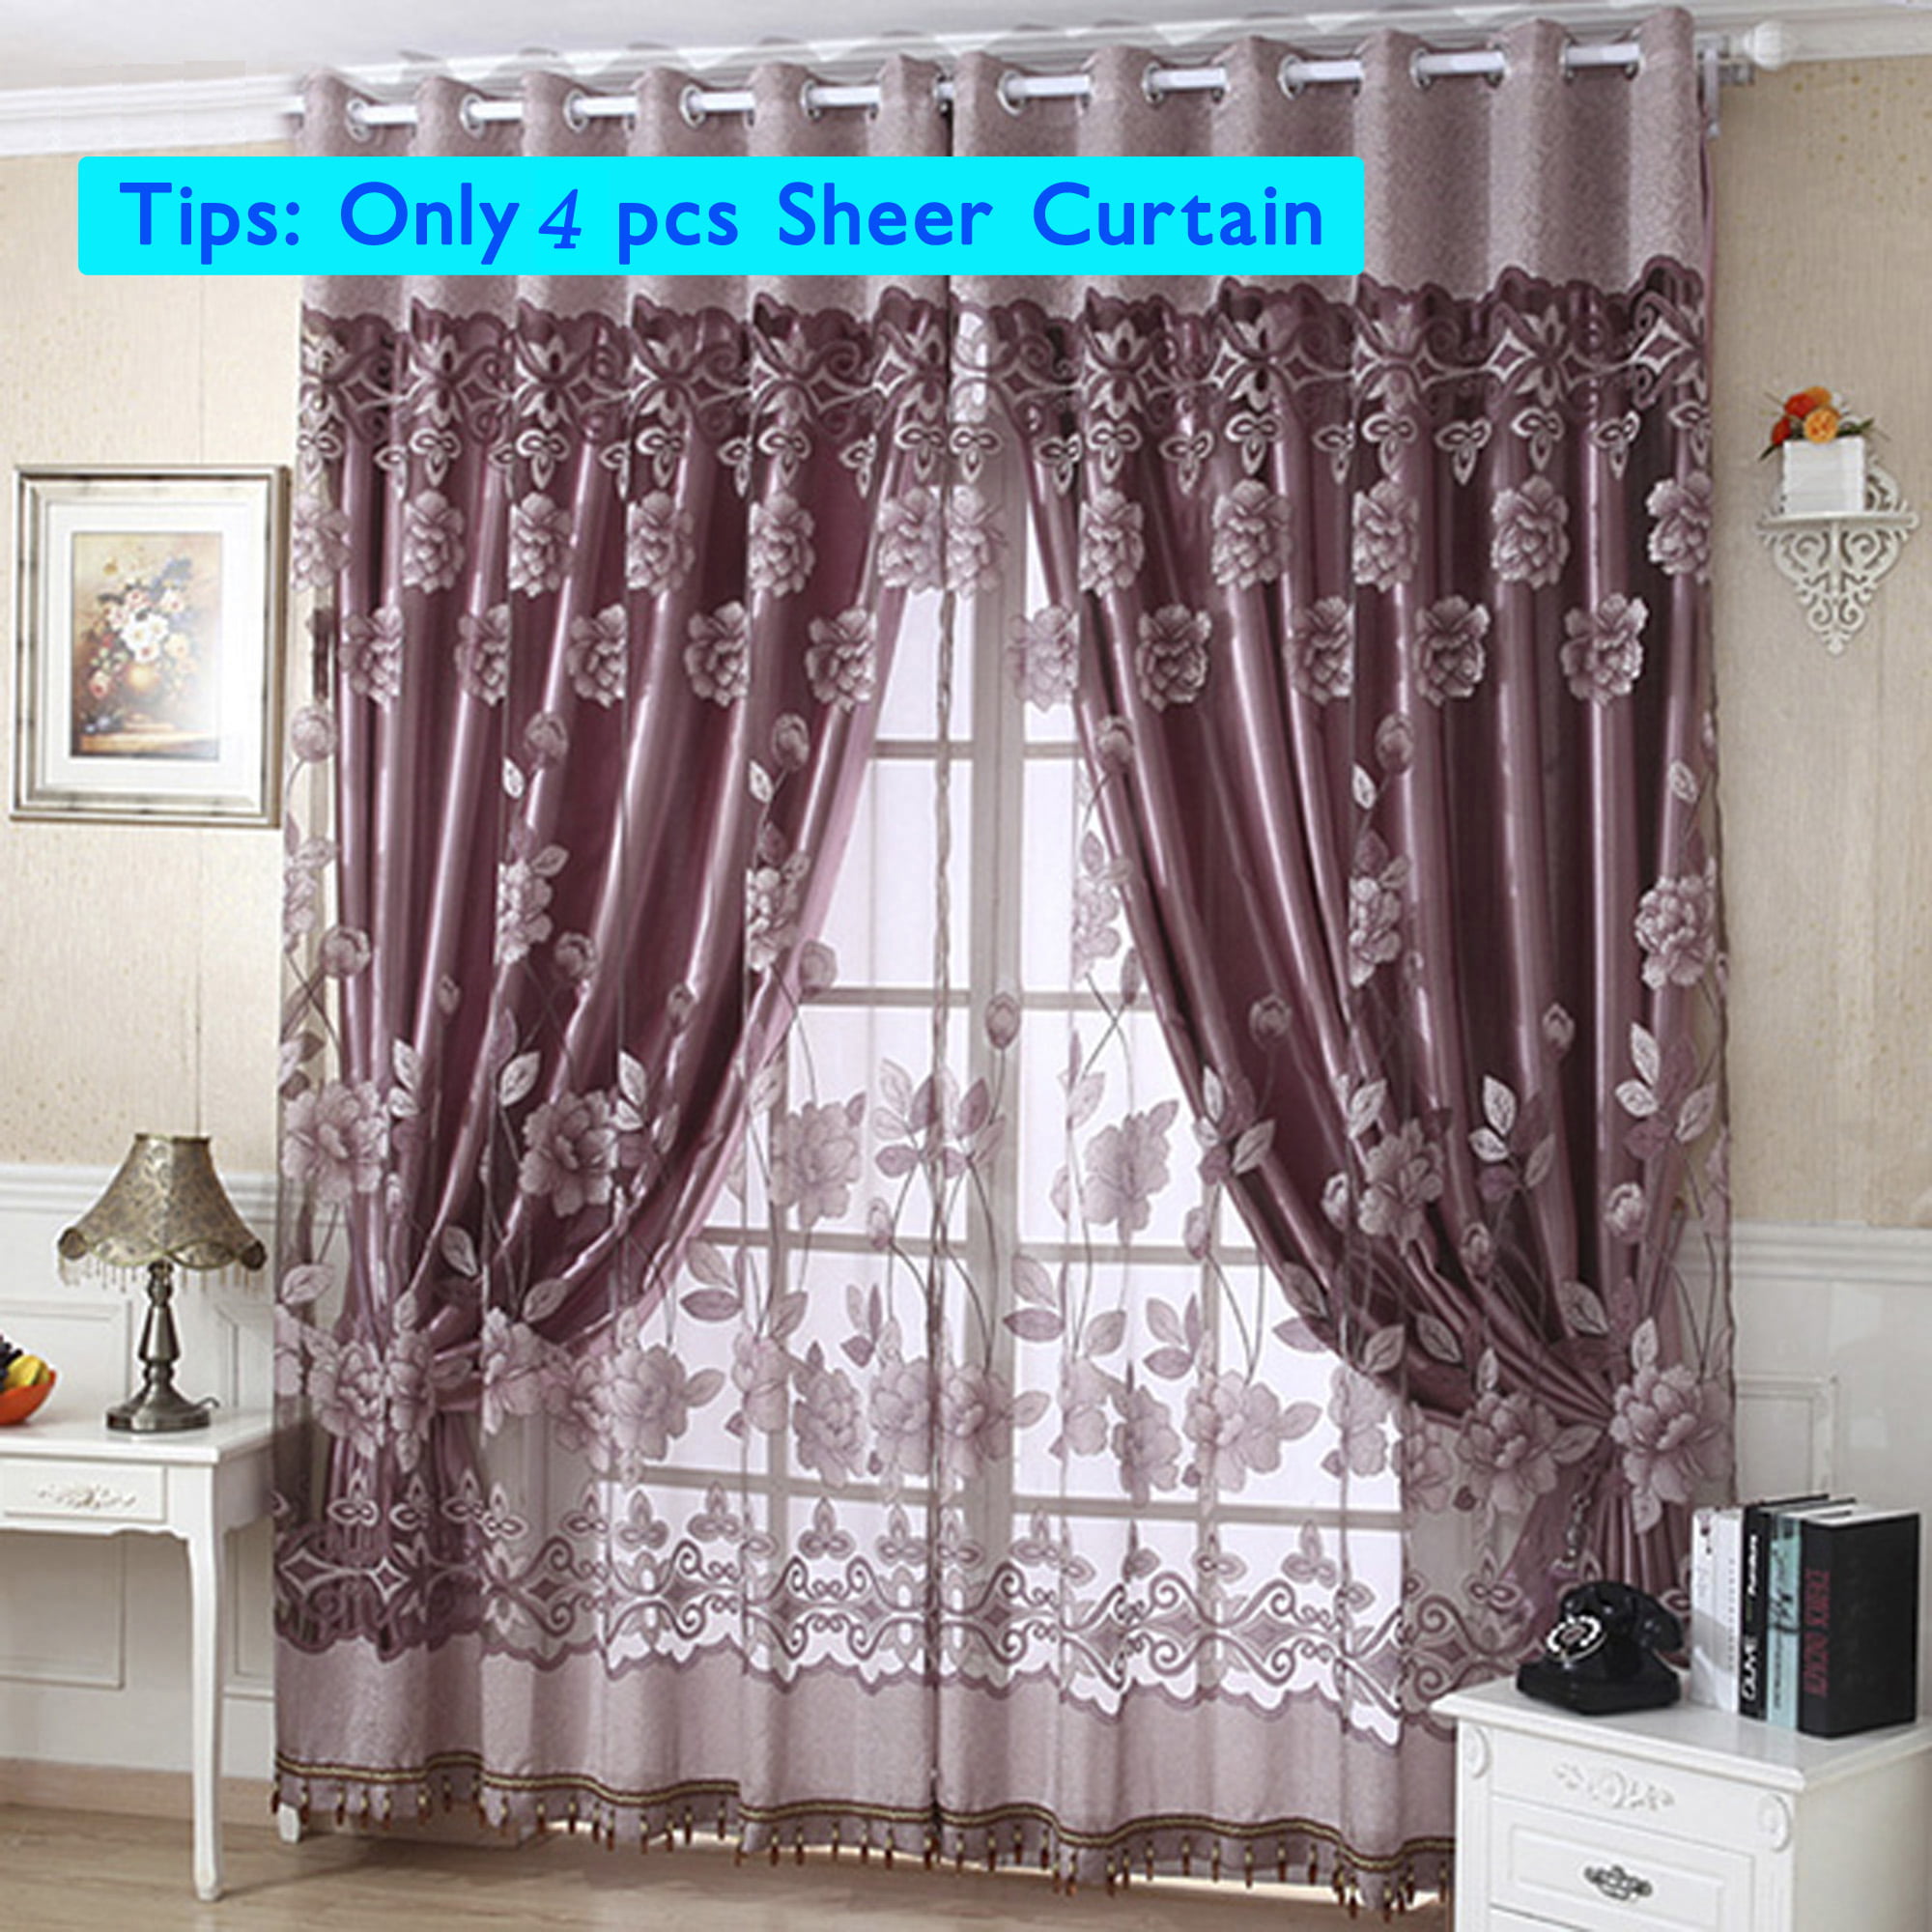 1Pc Solid Color Sheer Tulle Window Curtain Drape Living Room Patio Decor DEL 